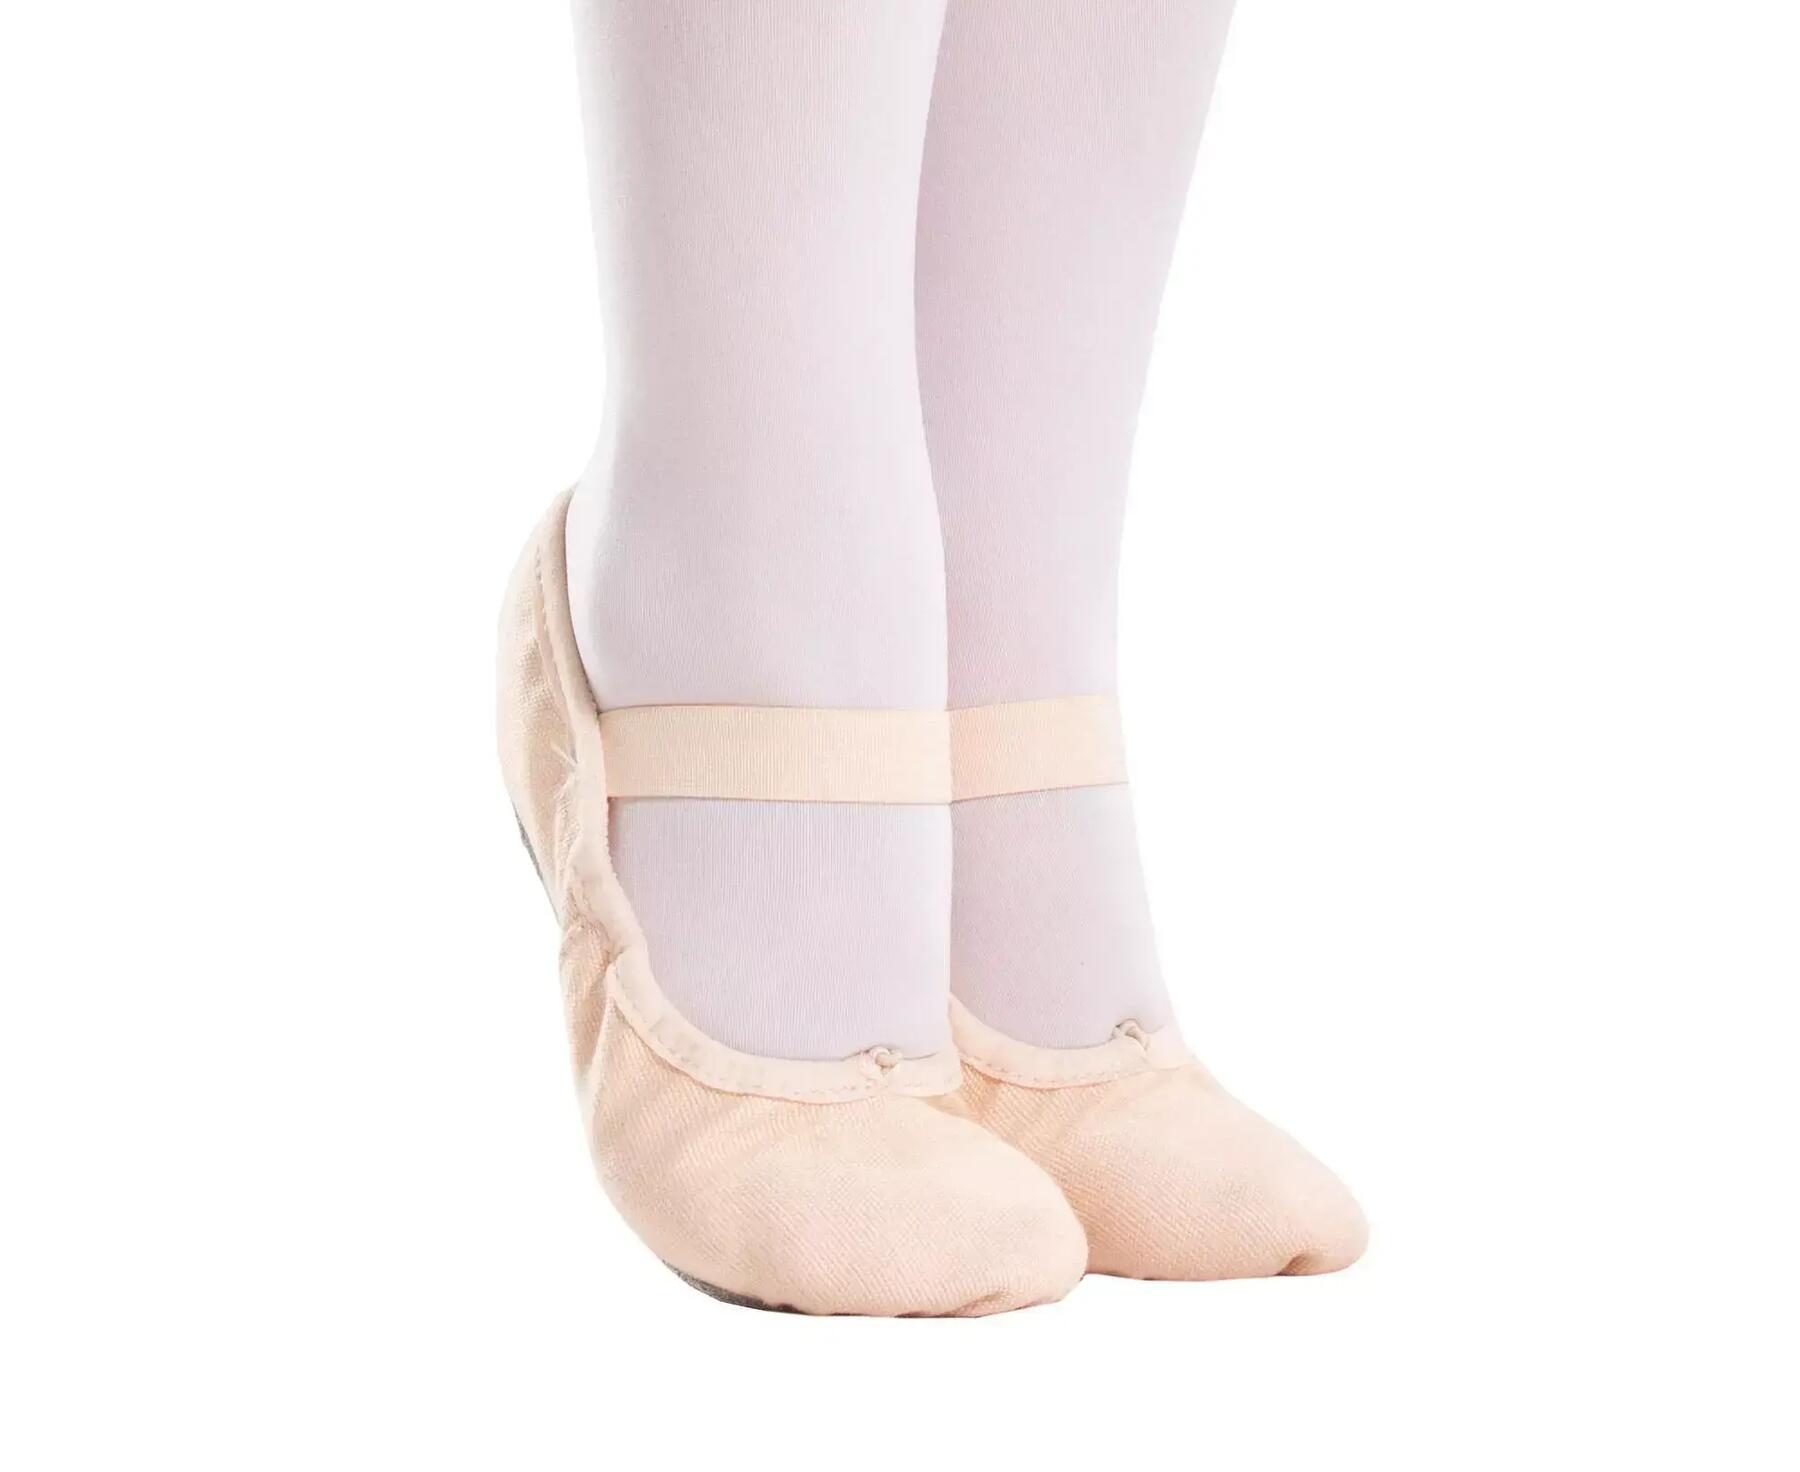 Hoe kies ik balletschoenen of spitzen?